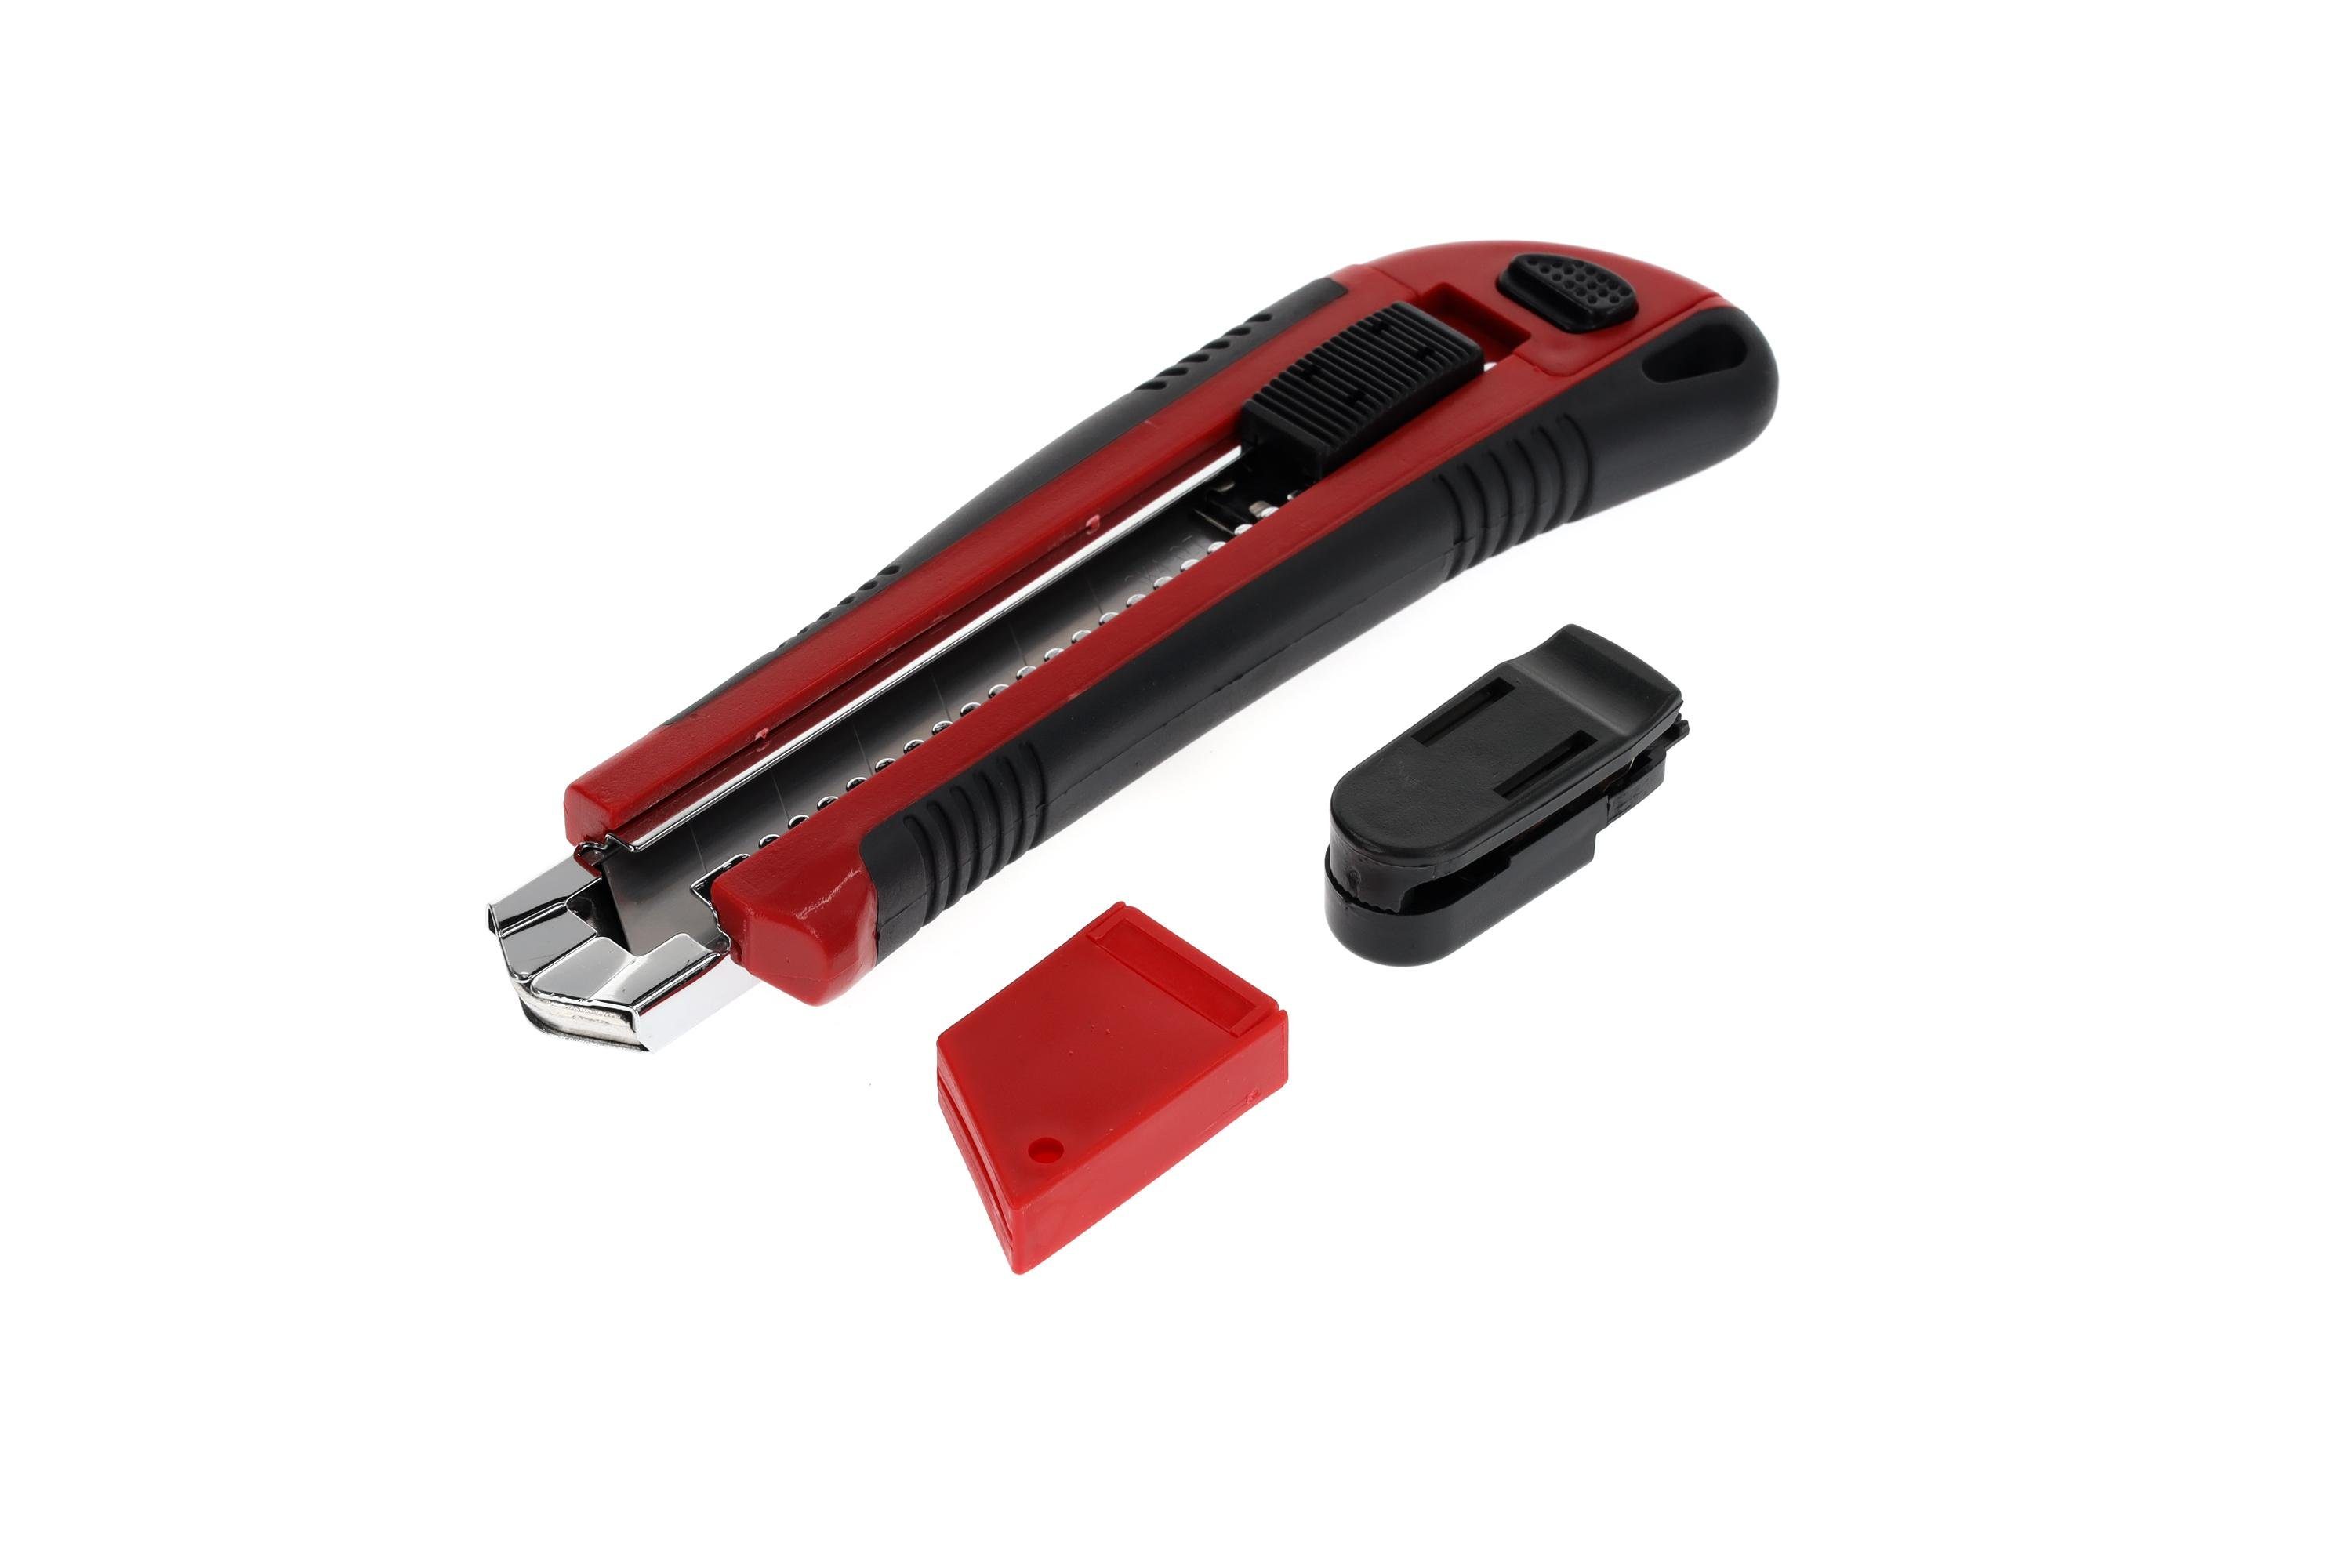 Gedore Red Cuttermesser R93200025 Cuttermesser 5 Klingenbreite 25 mm mit Clip | Cutter